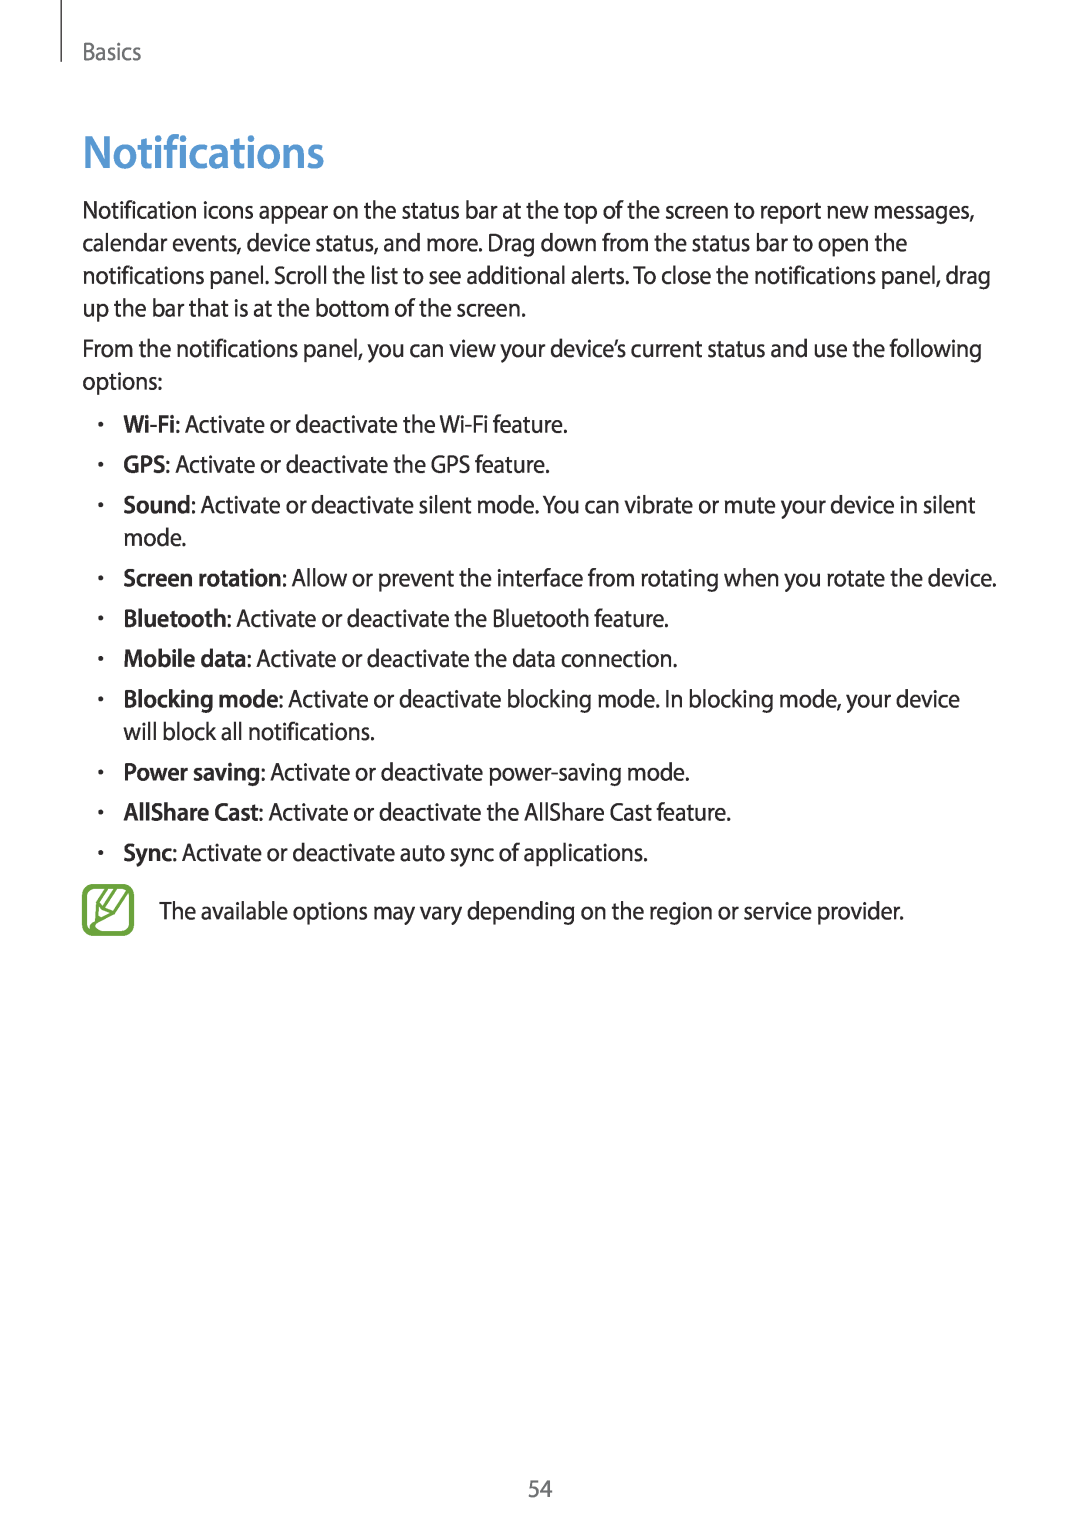 Samsung EK-GC100 user manual Notifications, Basics 